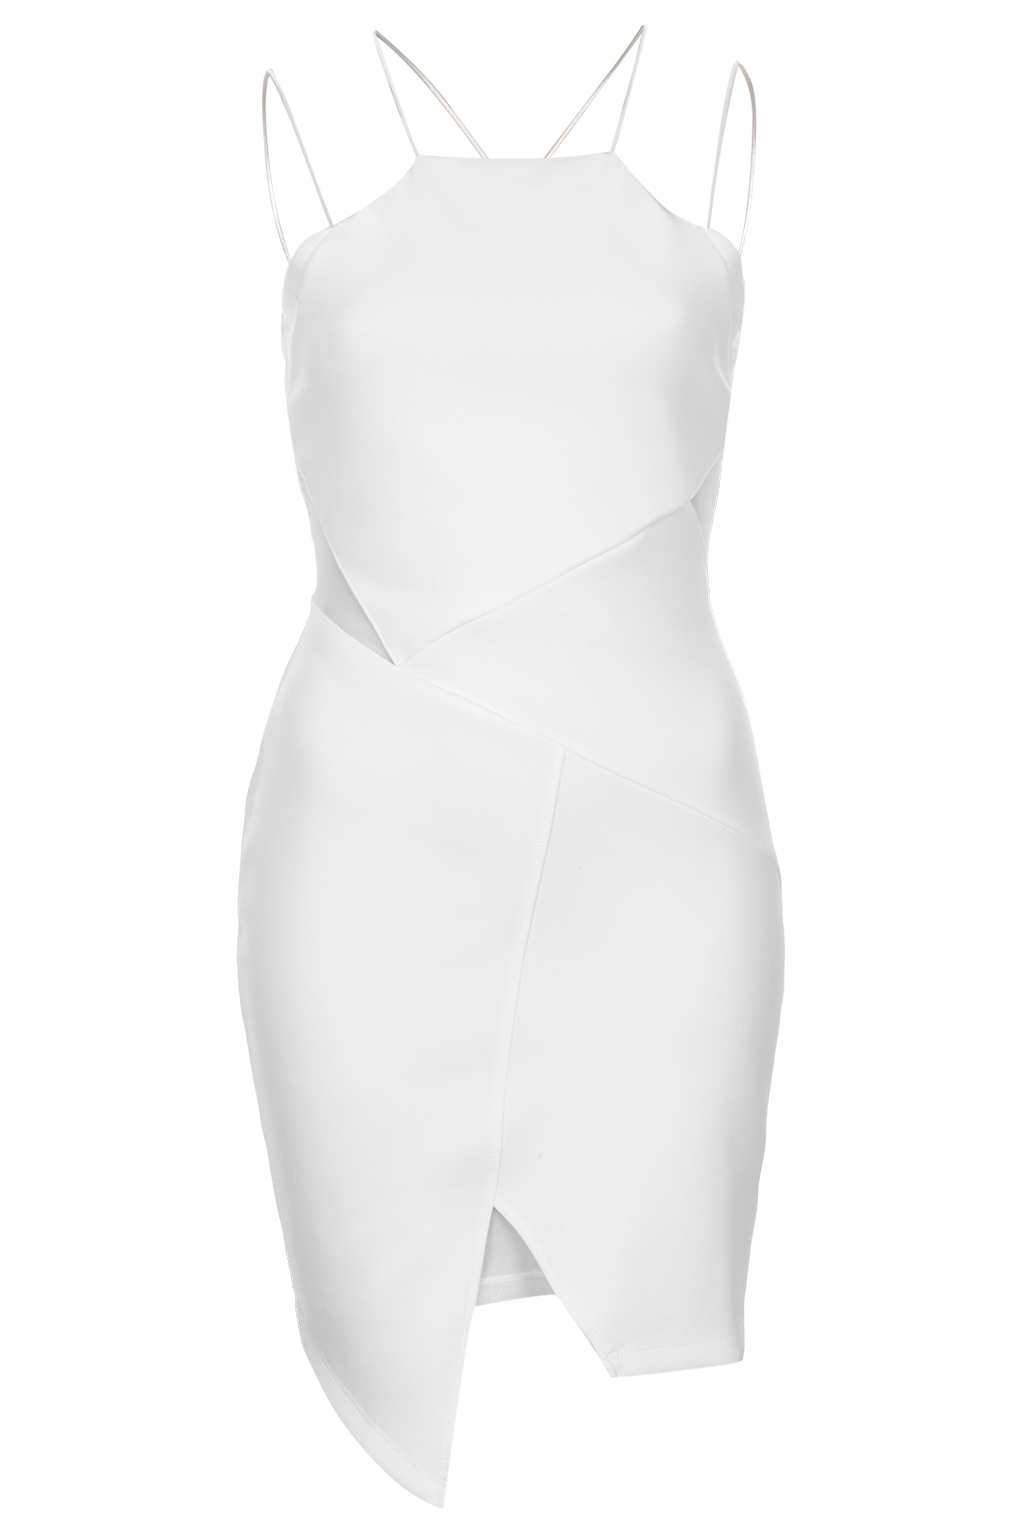 Topshop Strappy Step Hem Dress in White | Lyst